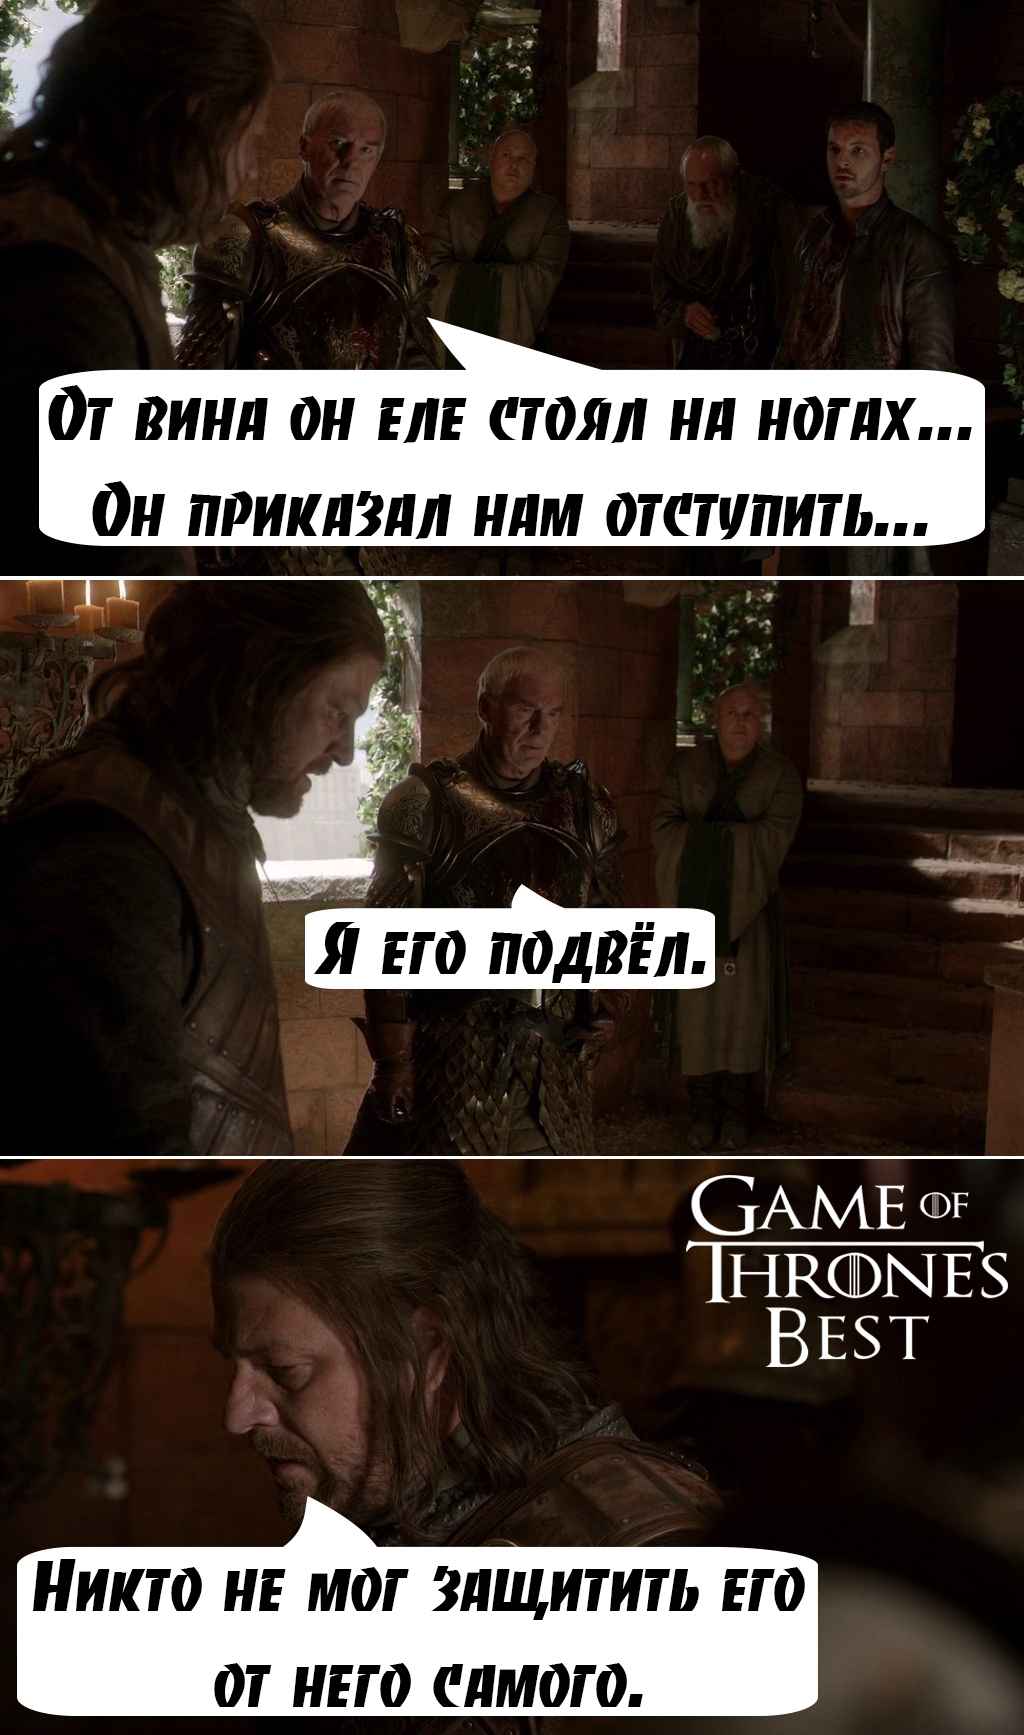 Robert Baratheon - My, Game of Thrones, Game of Thrones Season 1, Robert Baratheon, Usurper, King, GIF, Longpost